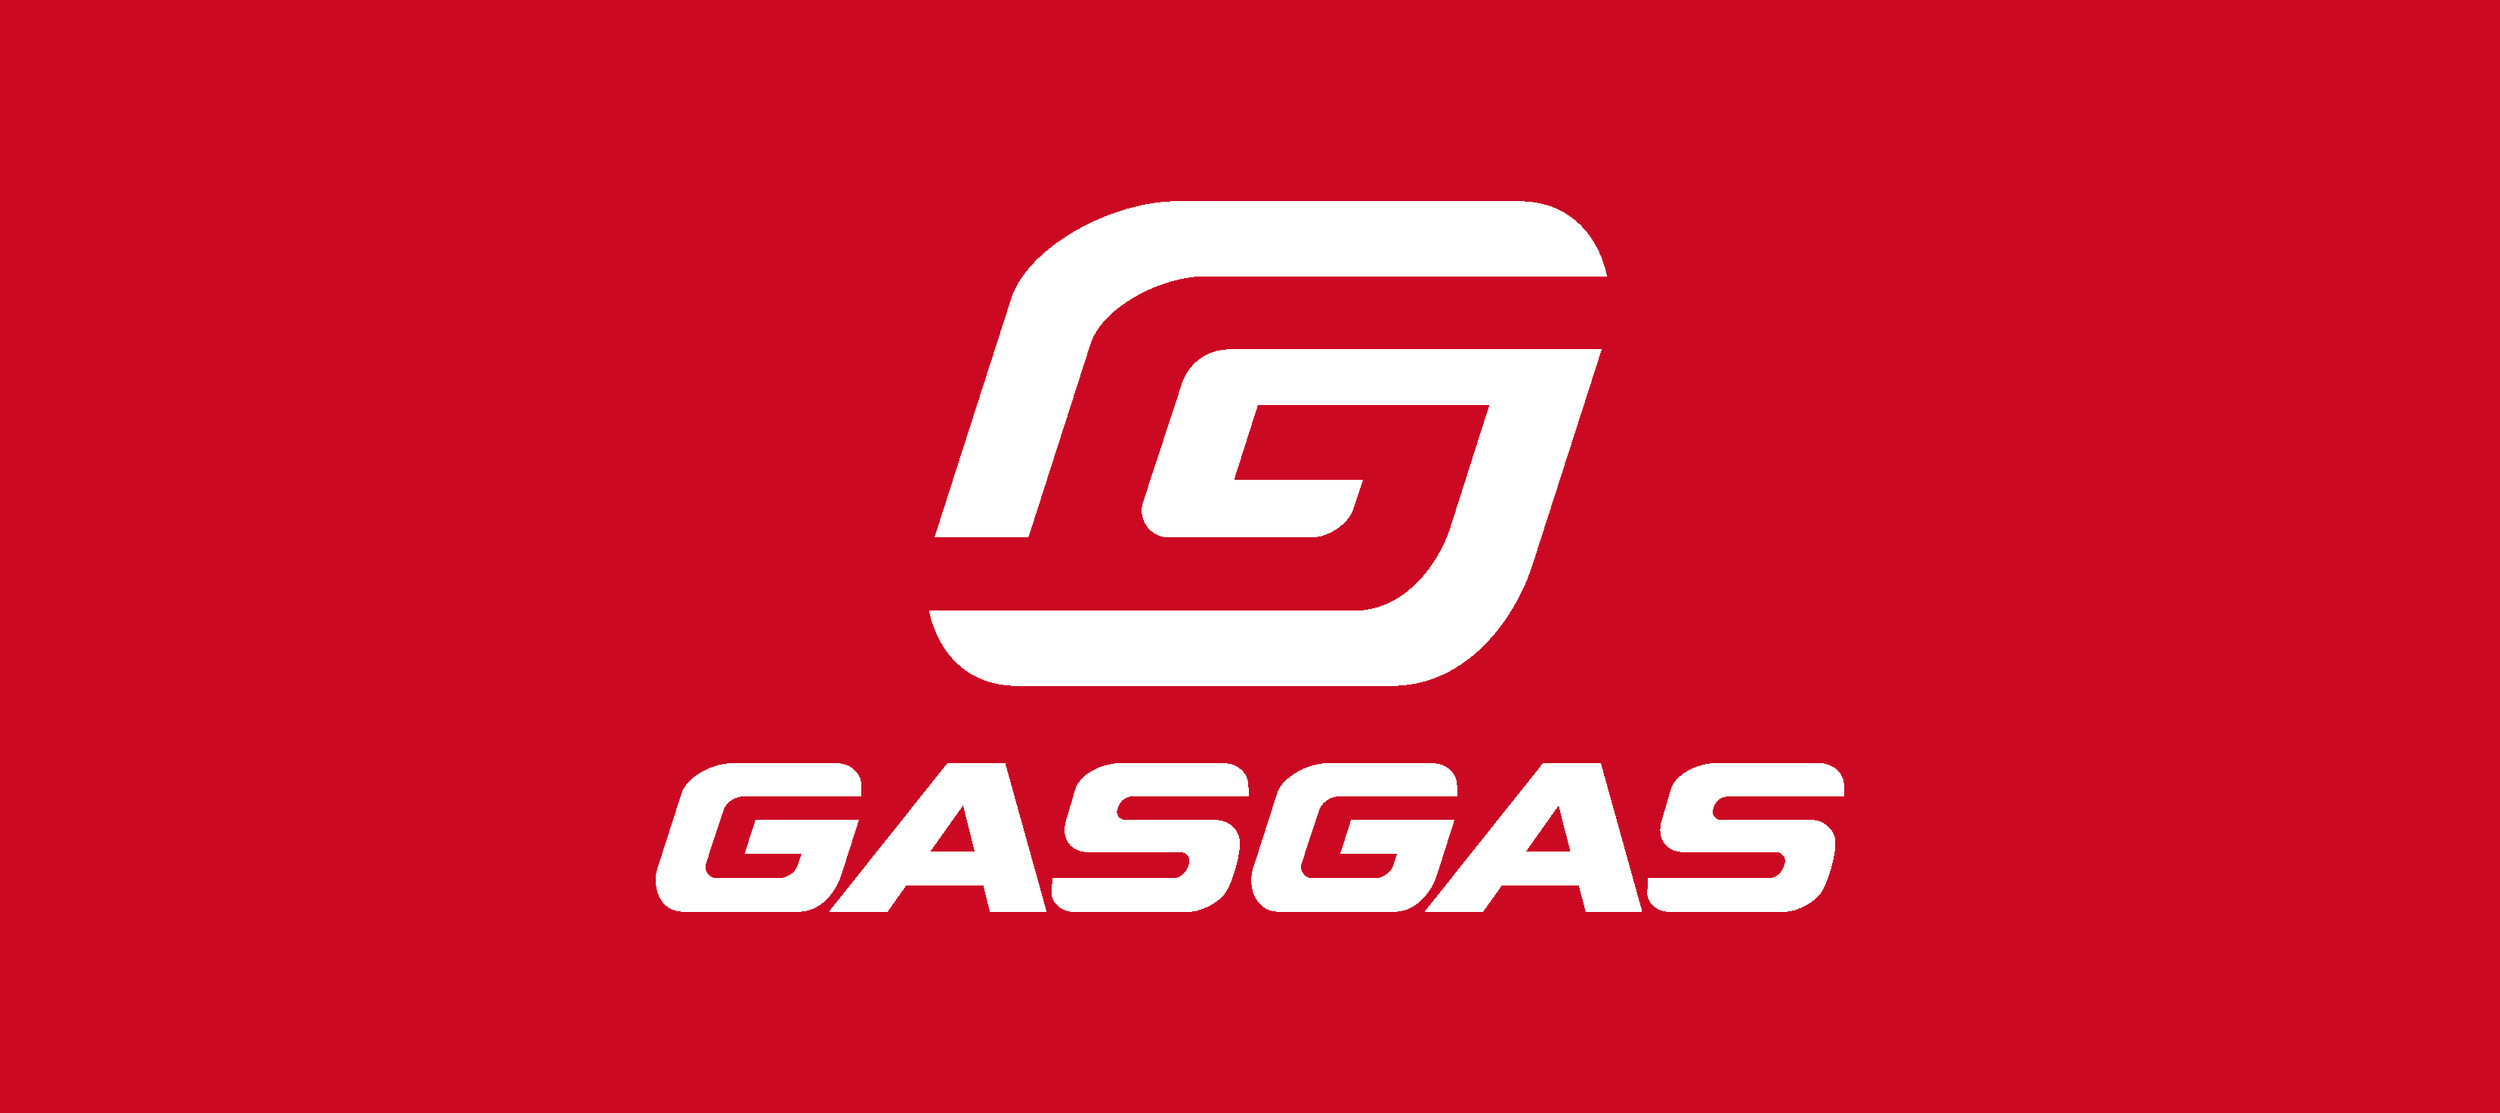 GASGAS Logo.png